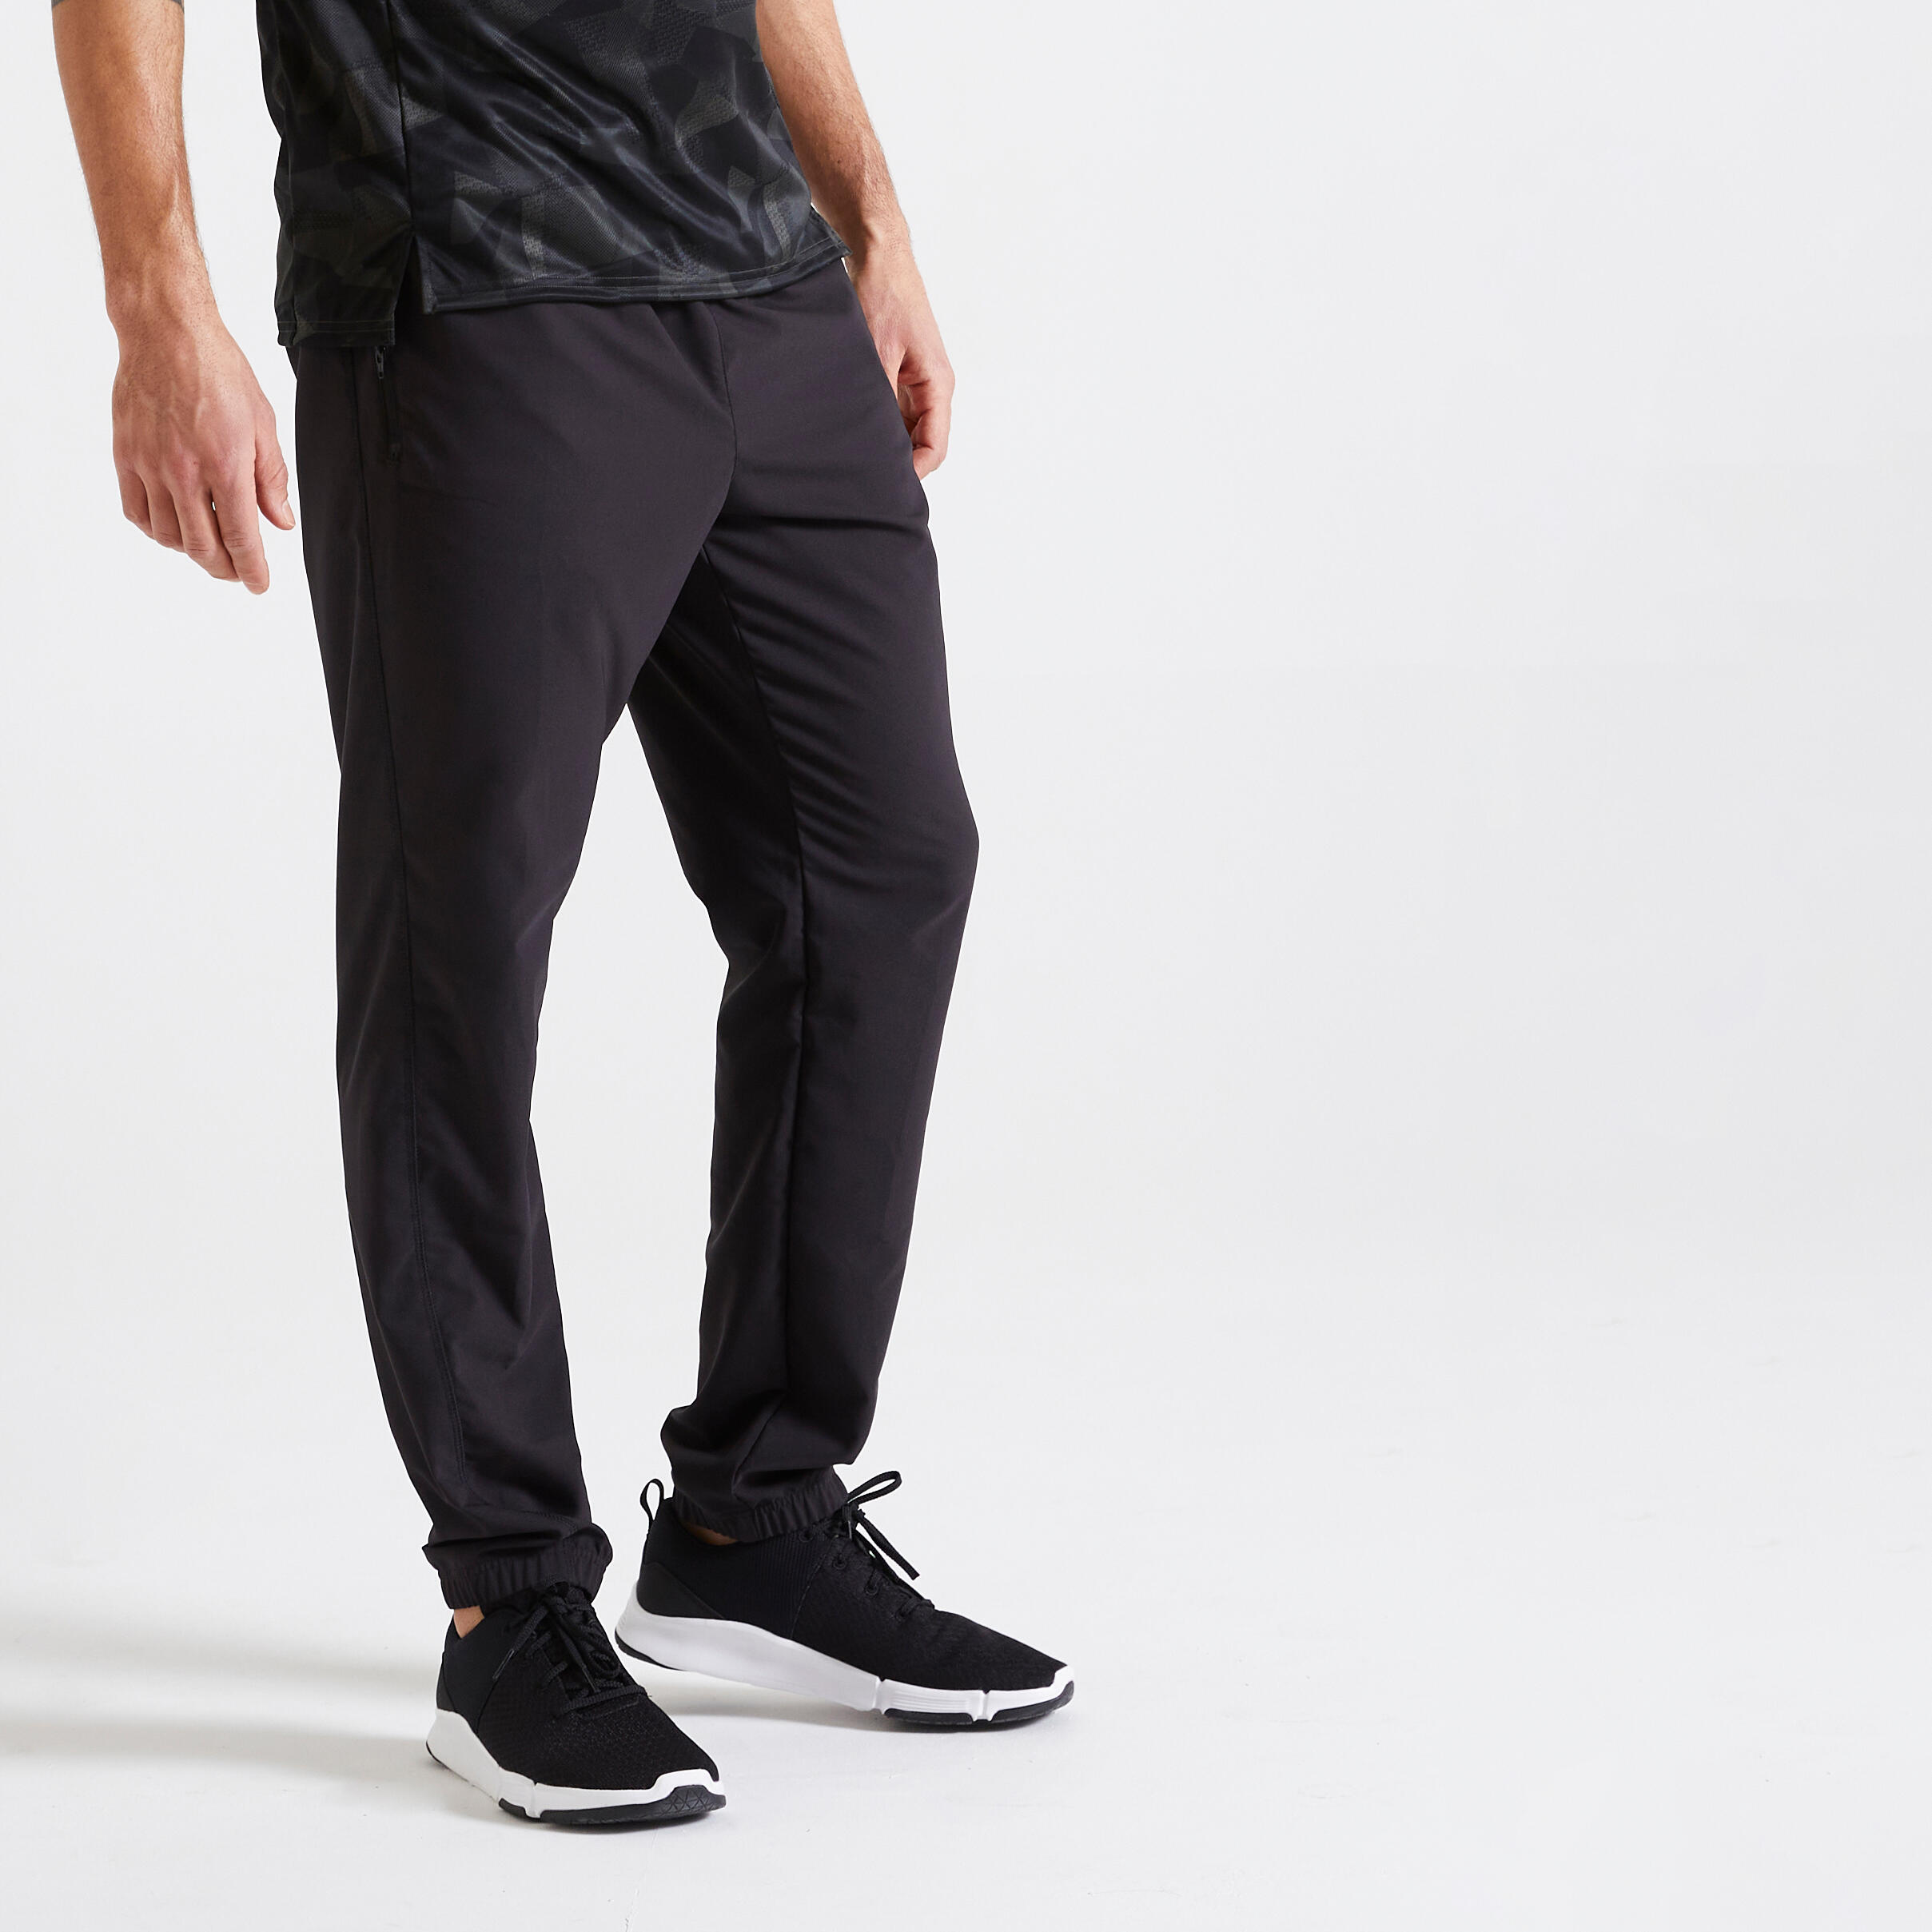 Men’s Fitness Pants - 120 Black - Black, Black - Domyos - Decathlon